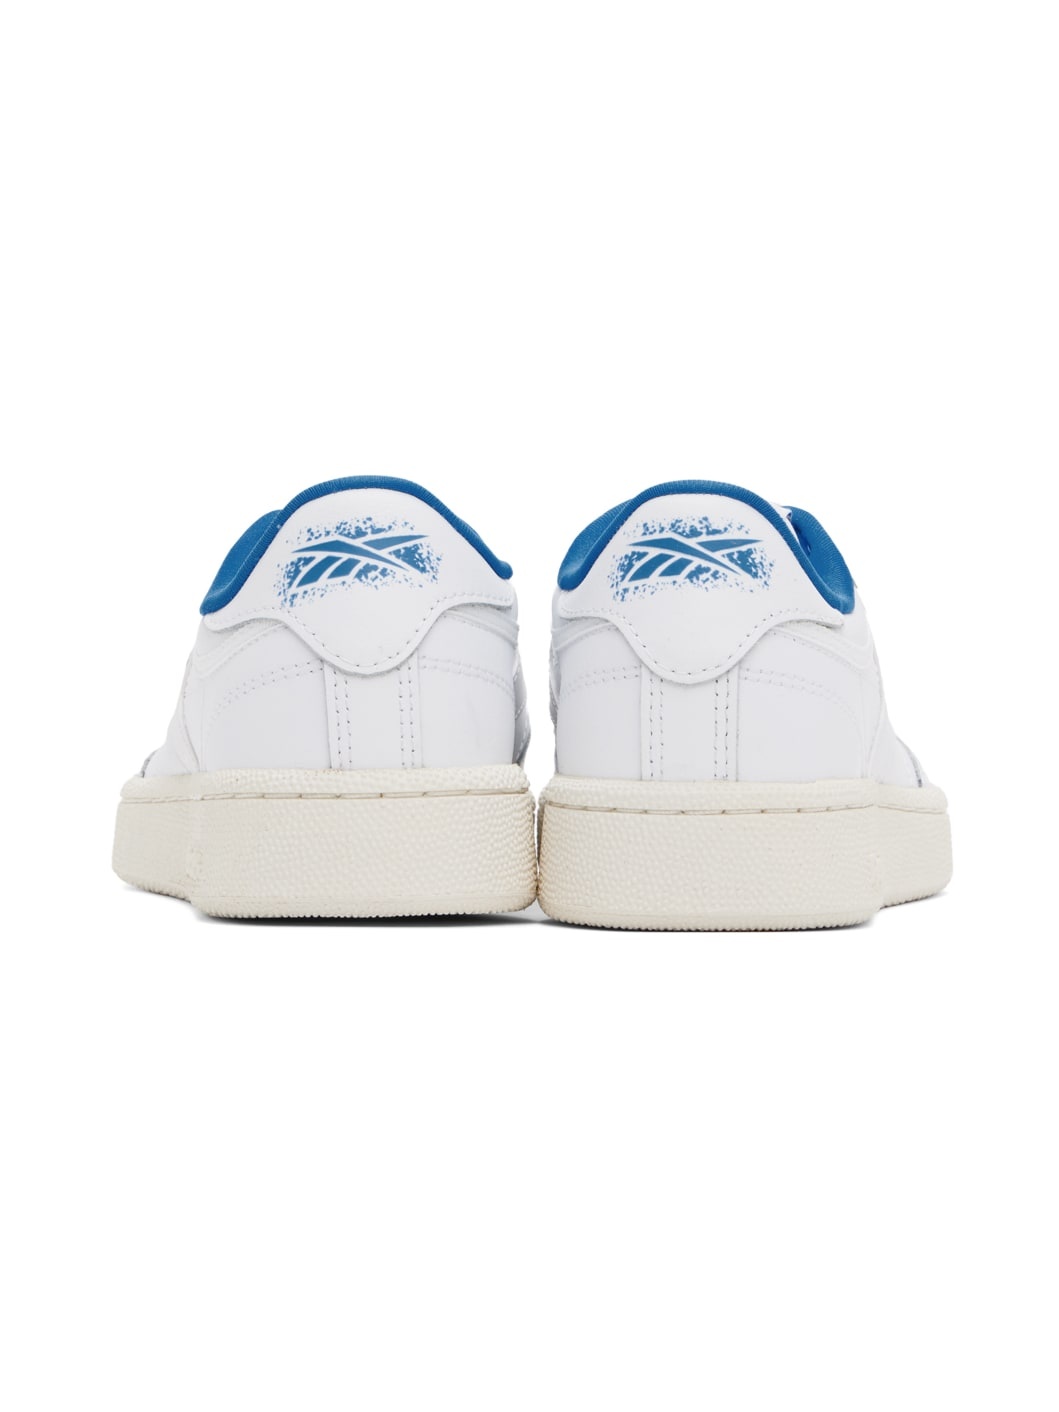 White & Blue Club C 85 Sneakers - 2